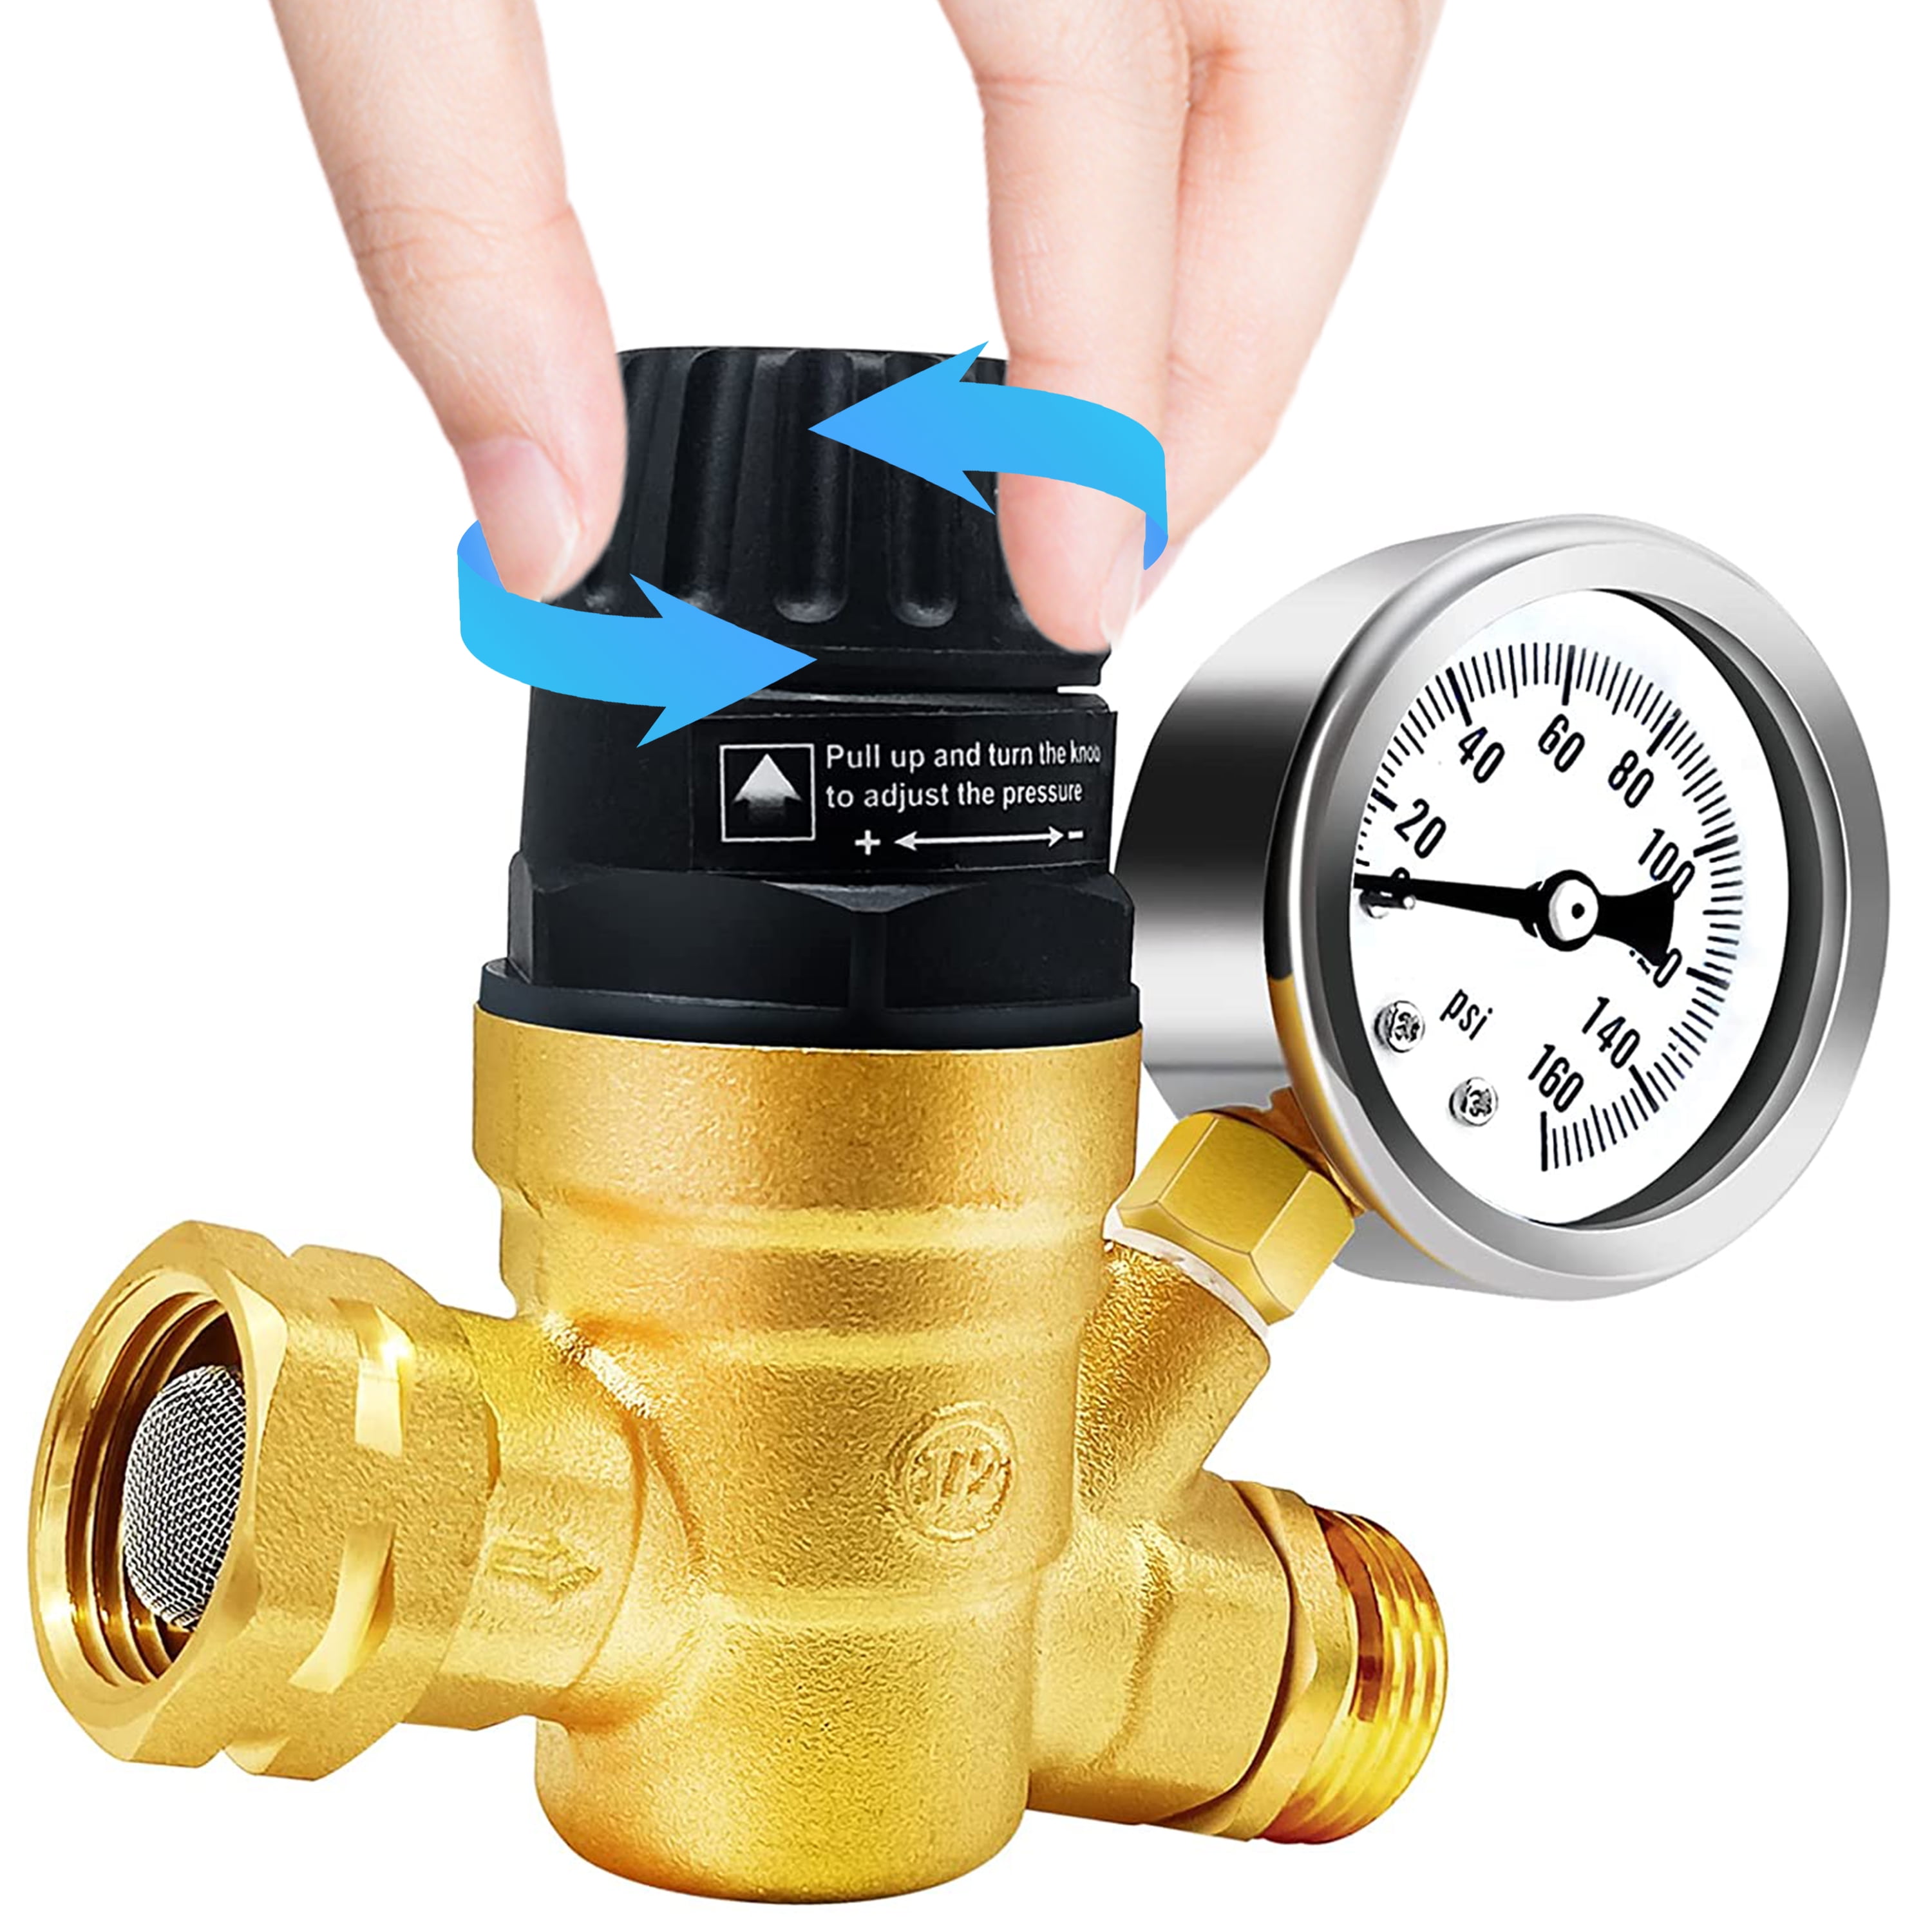 Adjustable Water Regulator, Brass, Lead-Free, Carded 